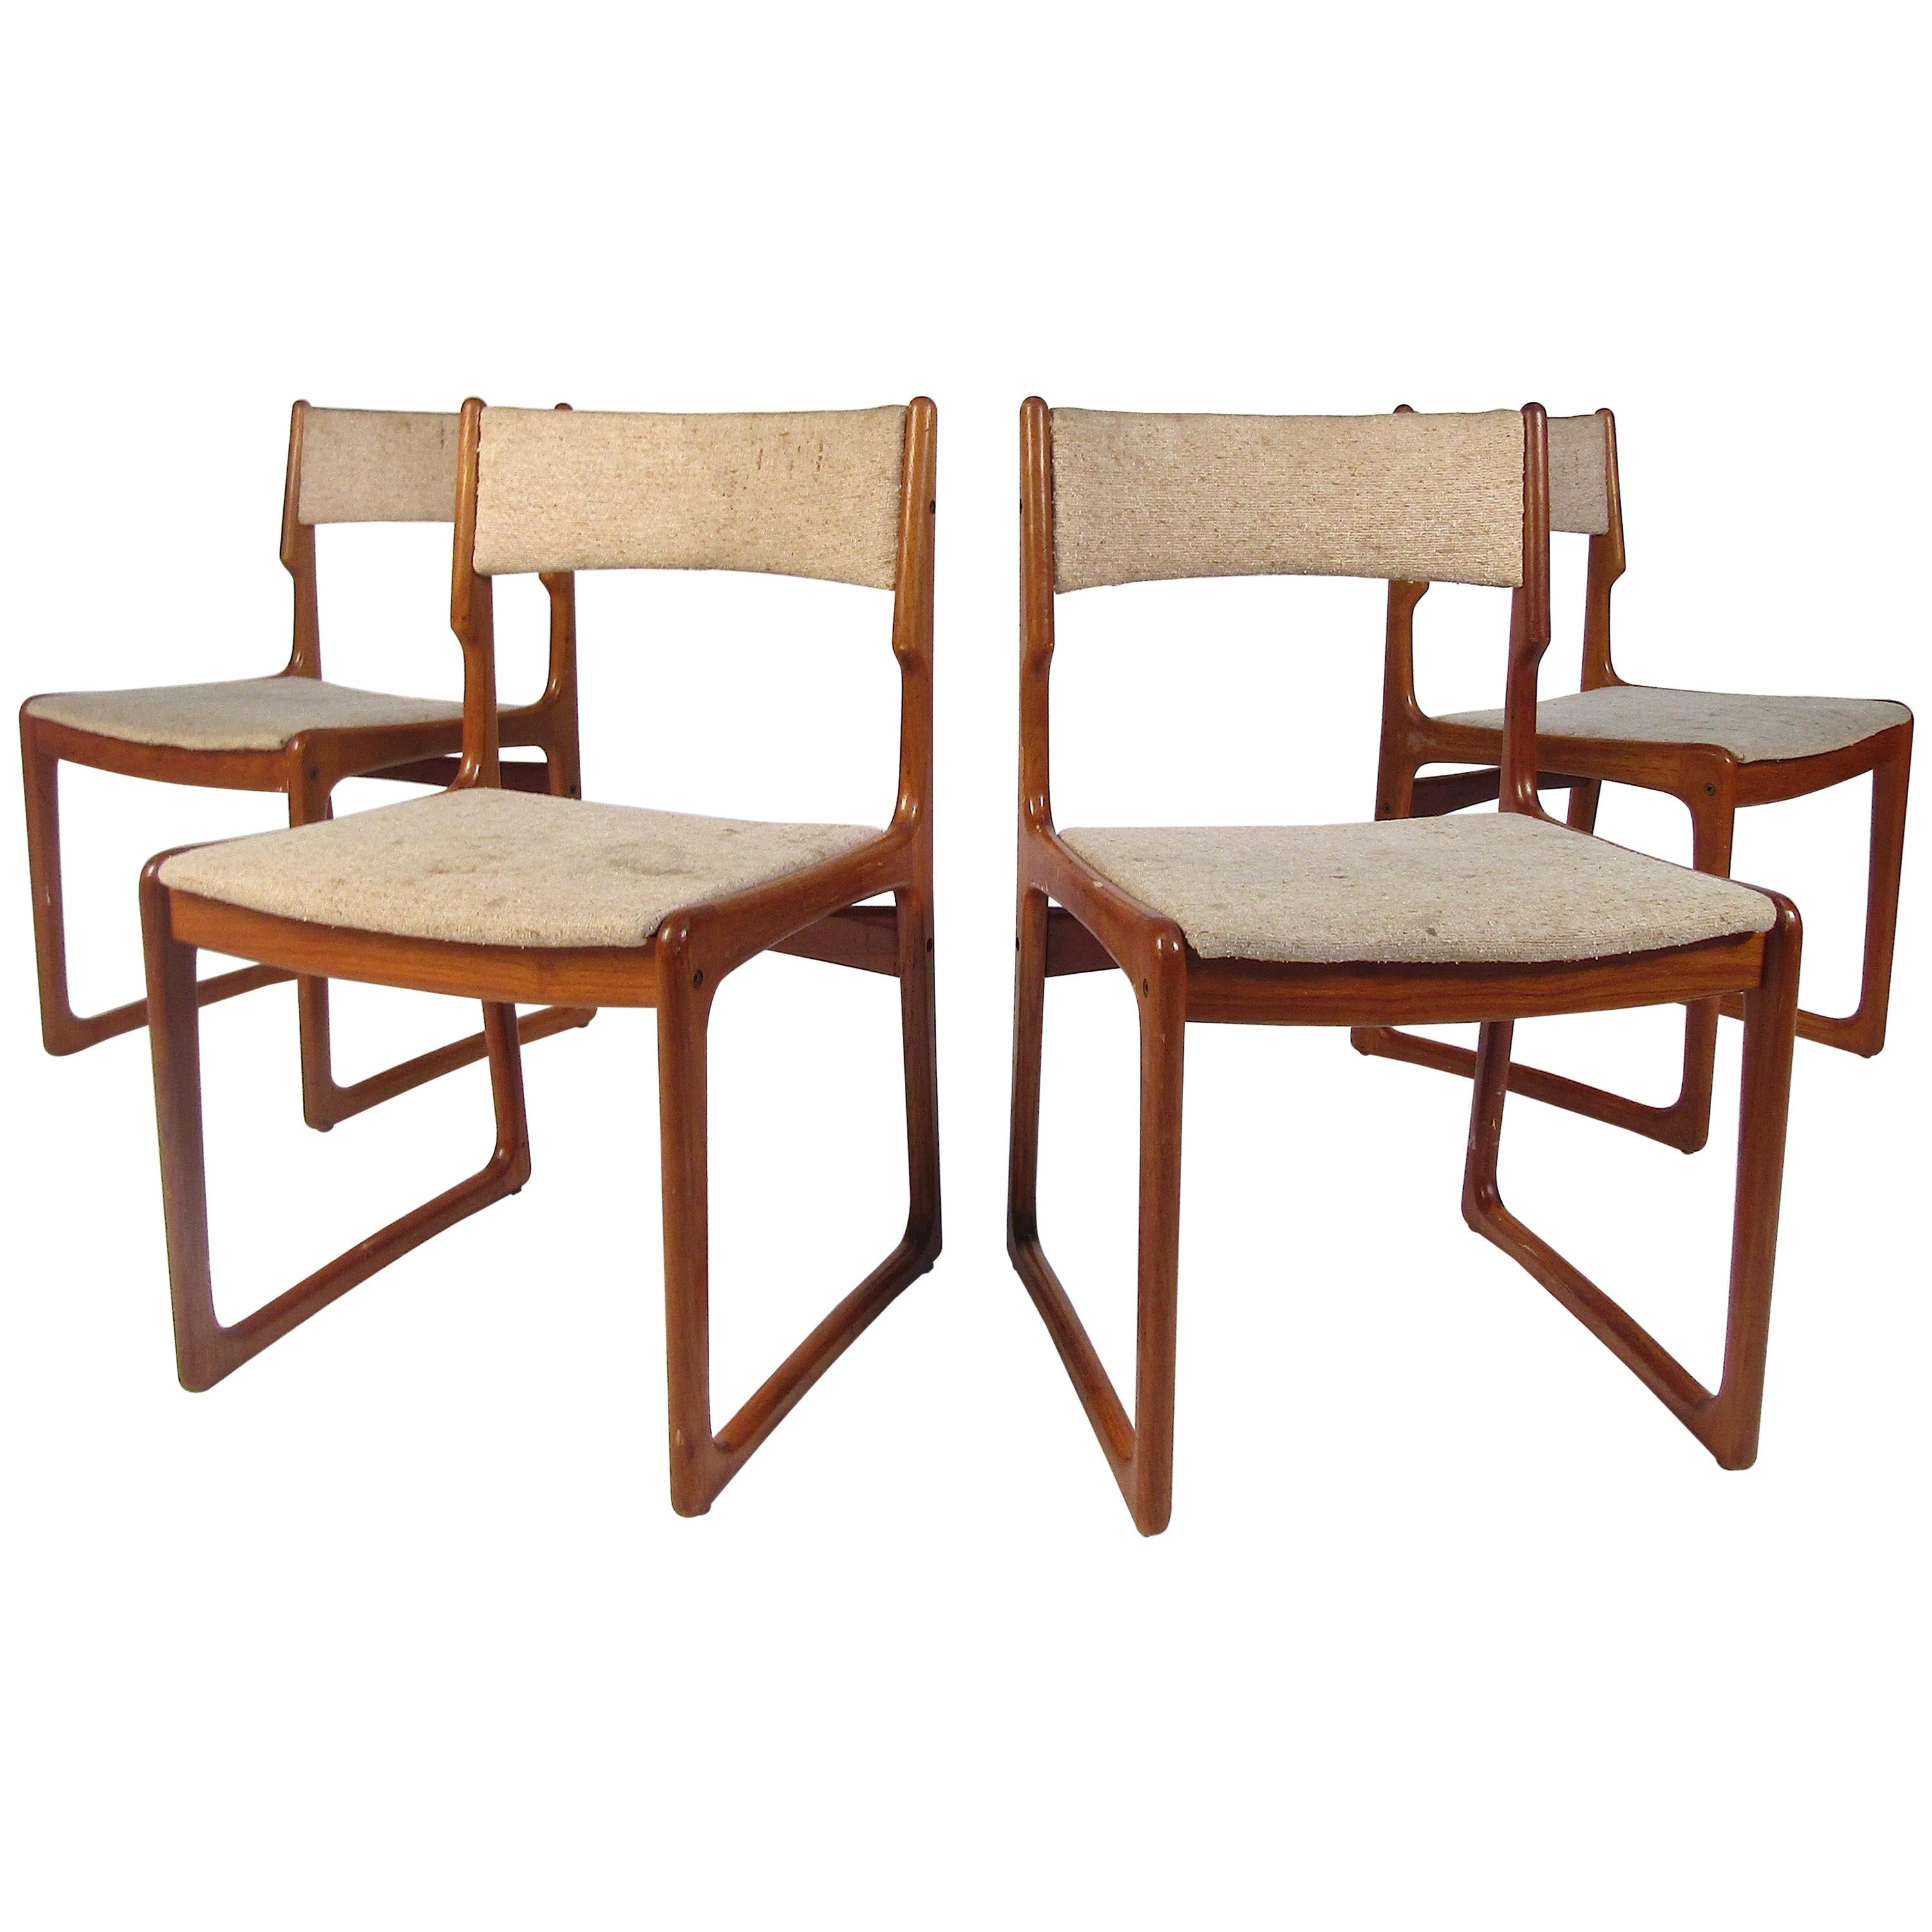 Set of 4 Danish Modern Dining Chairs